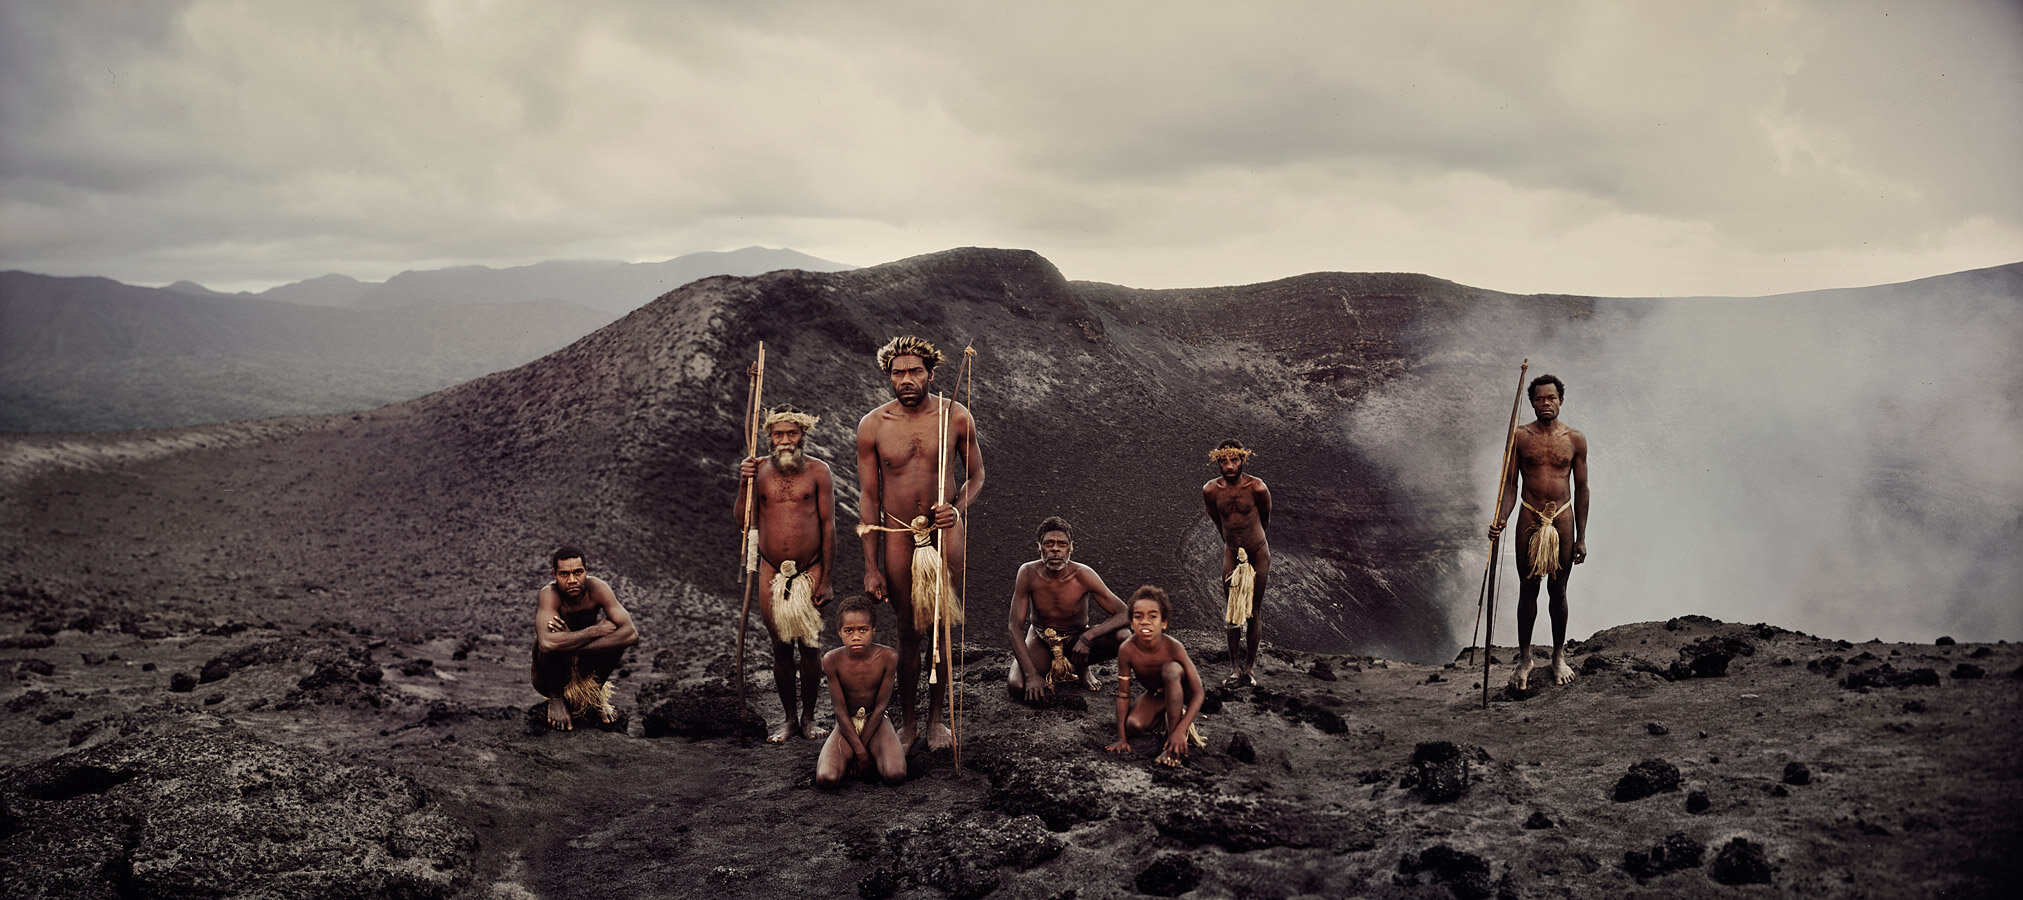 6 Ni Yakel villagers, Mount Yasur, Tanna Island, Vanuatu, Jimmy Nelson, September 2011.jpg